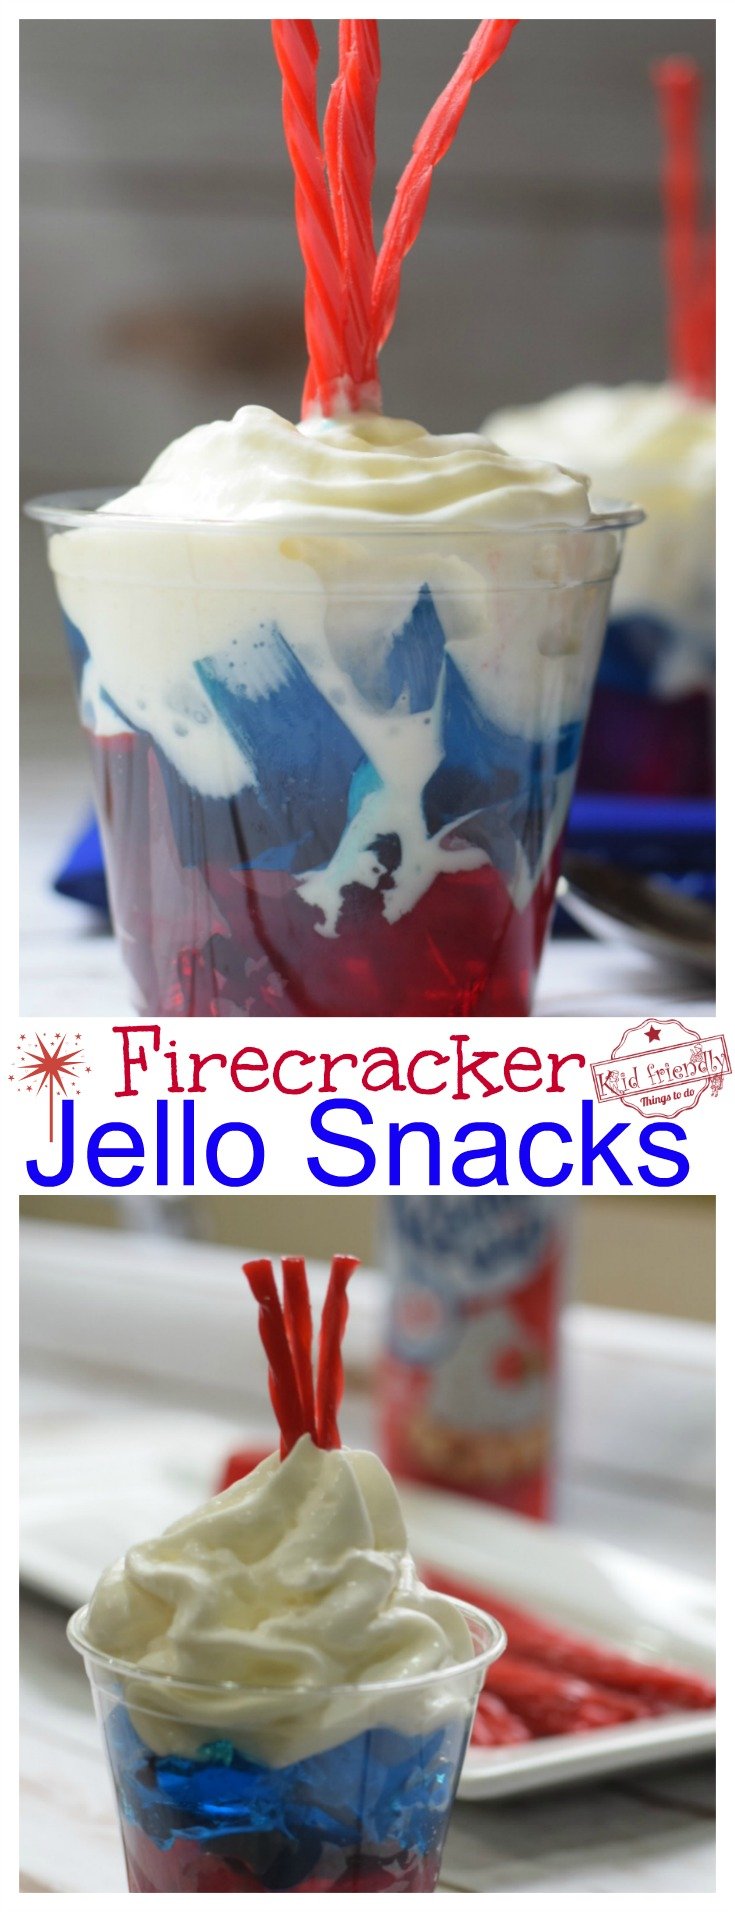 Firecracker Jello Snack dessert. Easy and patriotic fun food treats! www.kidfriendlythingstodo.com Memorial Day, Labor Day, Fourth of July